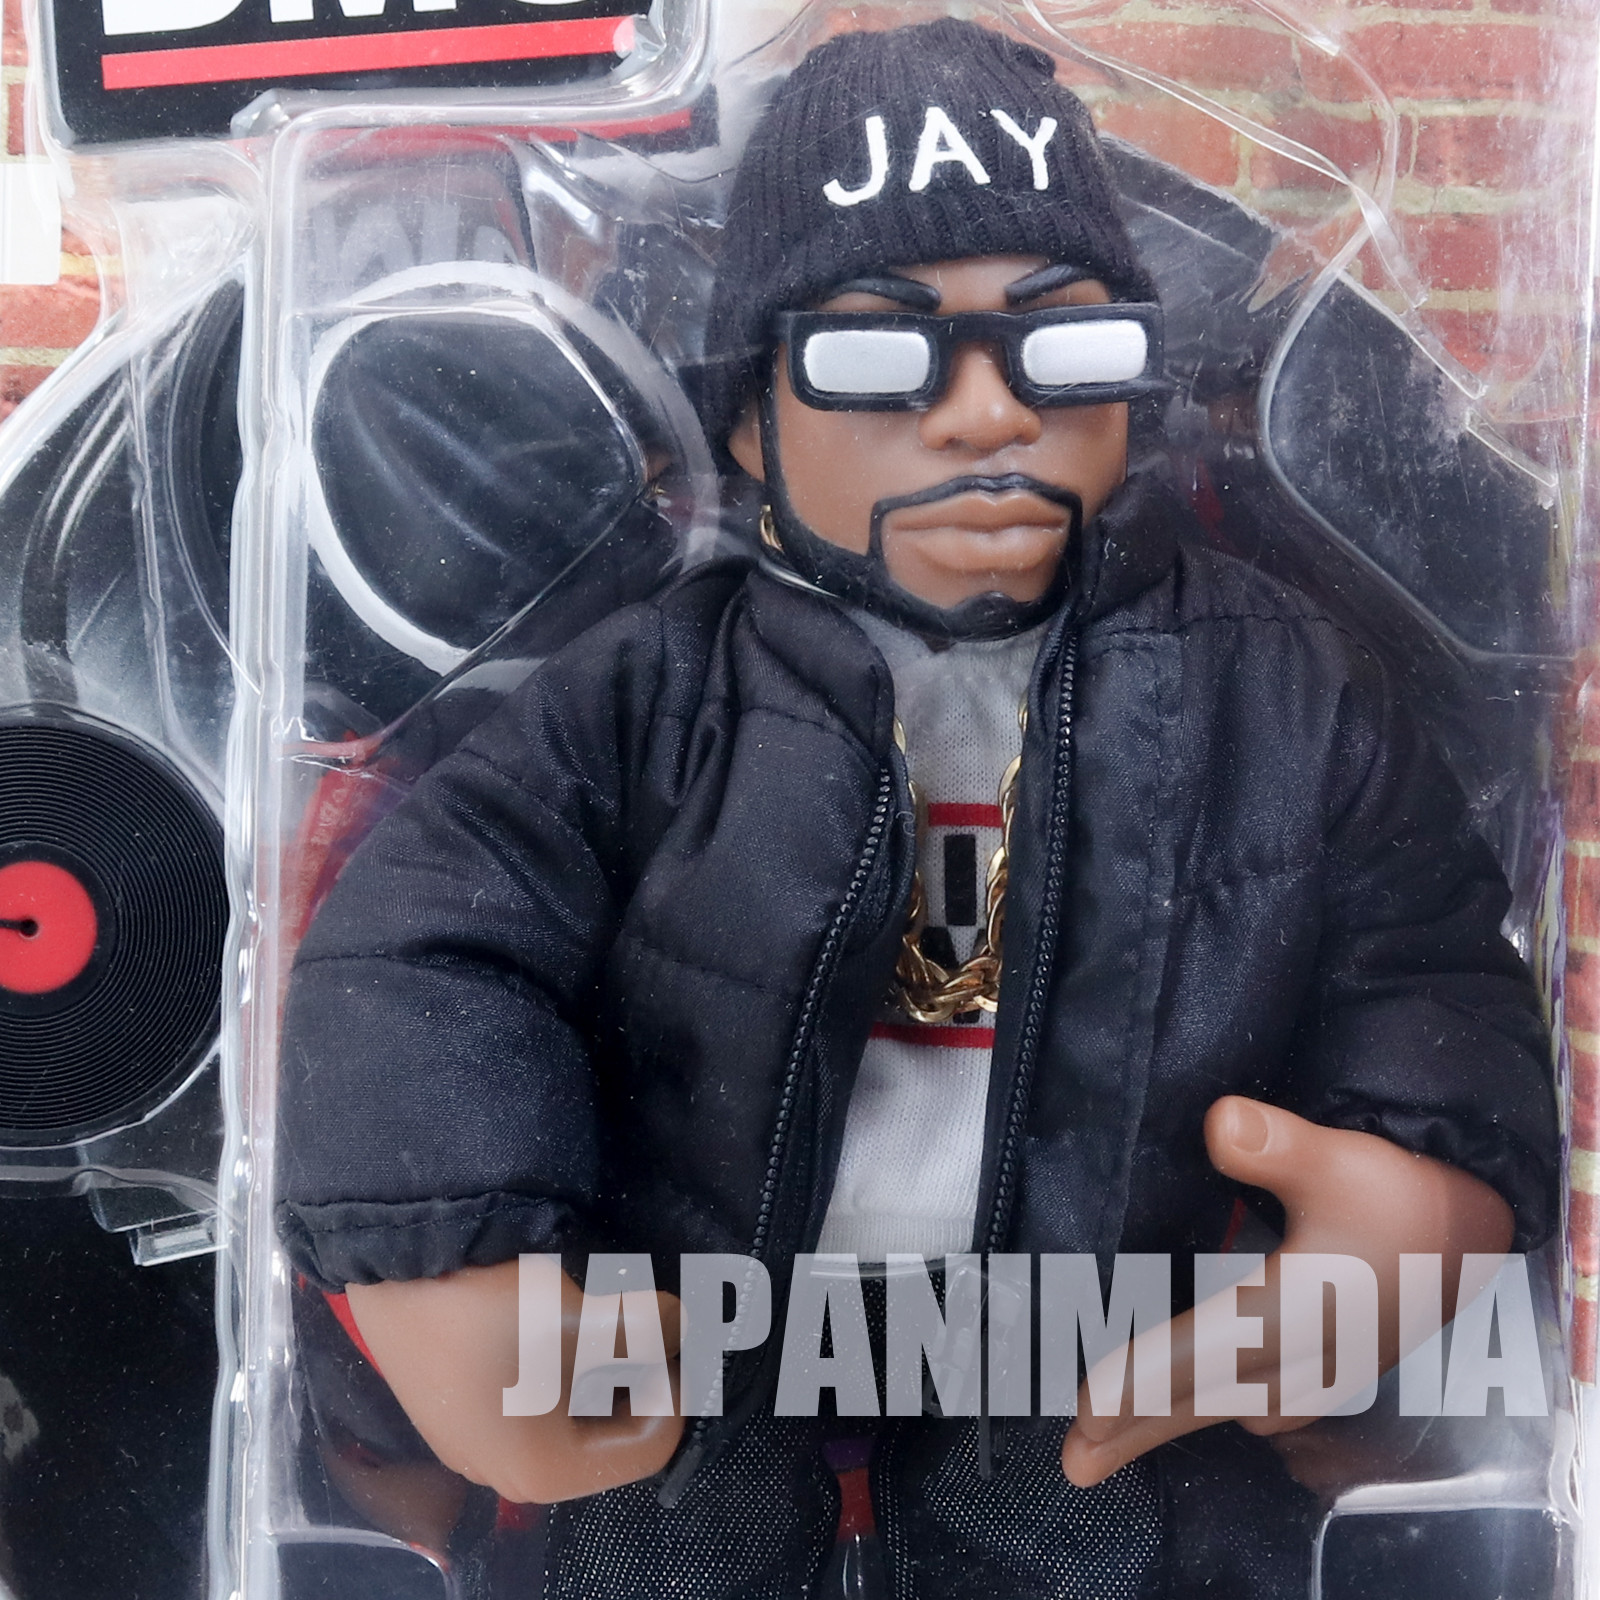 RUN DMC Jam Master Jay Action Figure Down jacket Ver. Mezco Toy HIP HOP RAP